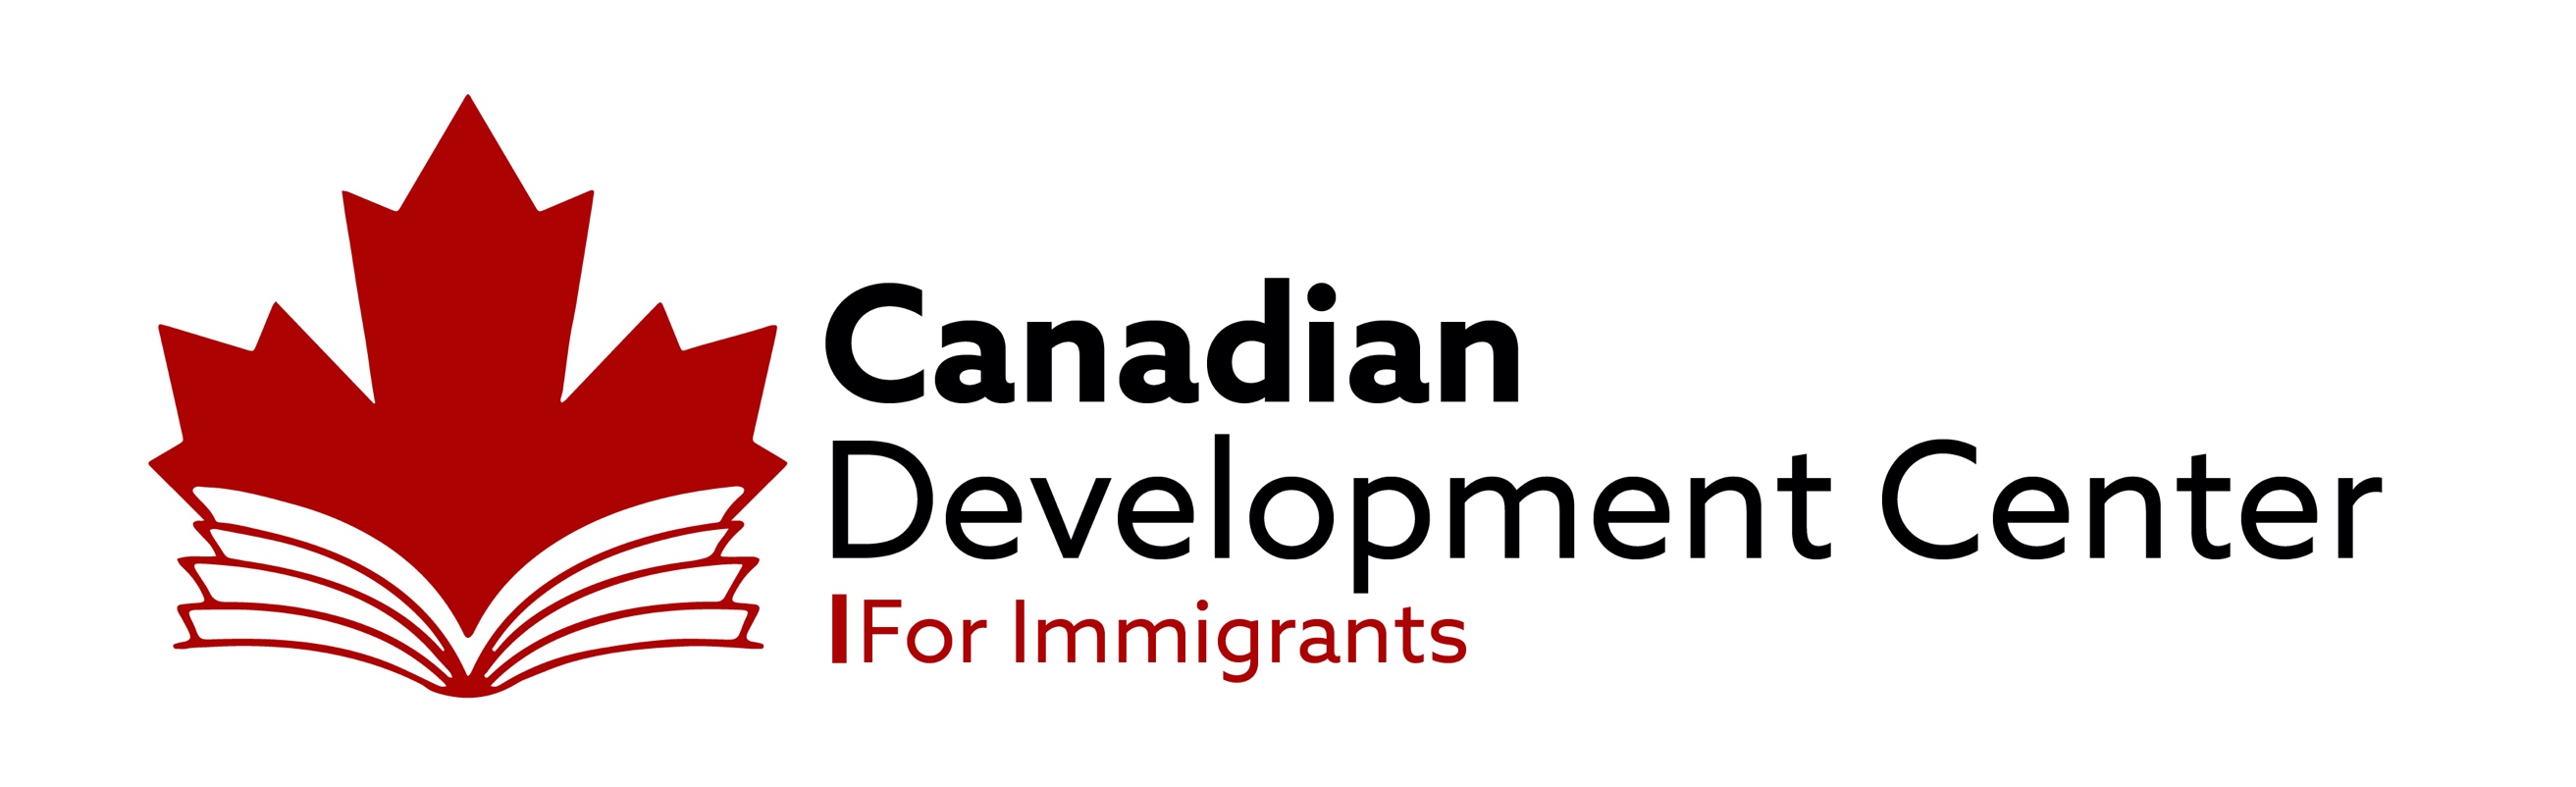 Canadian Development Center Logo